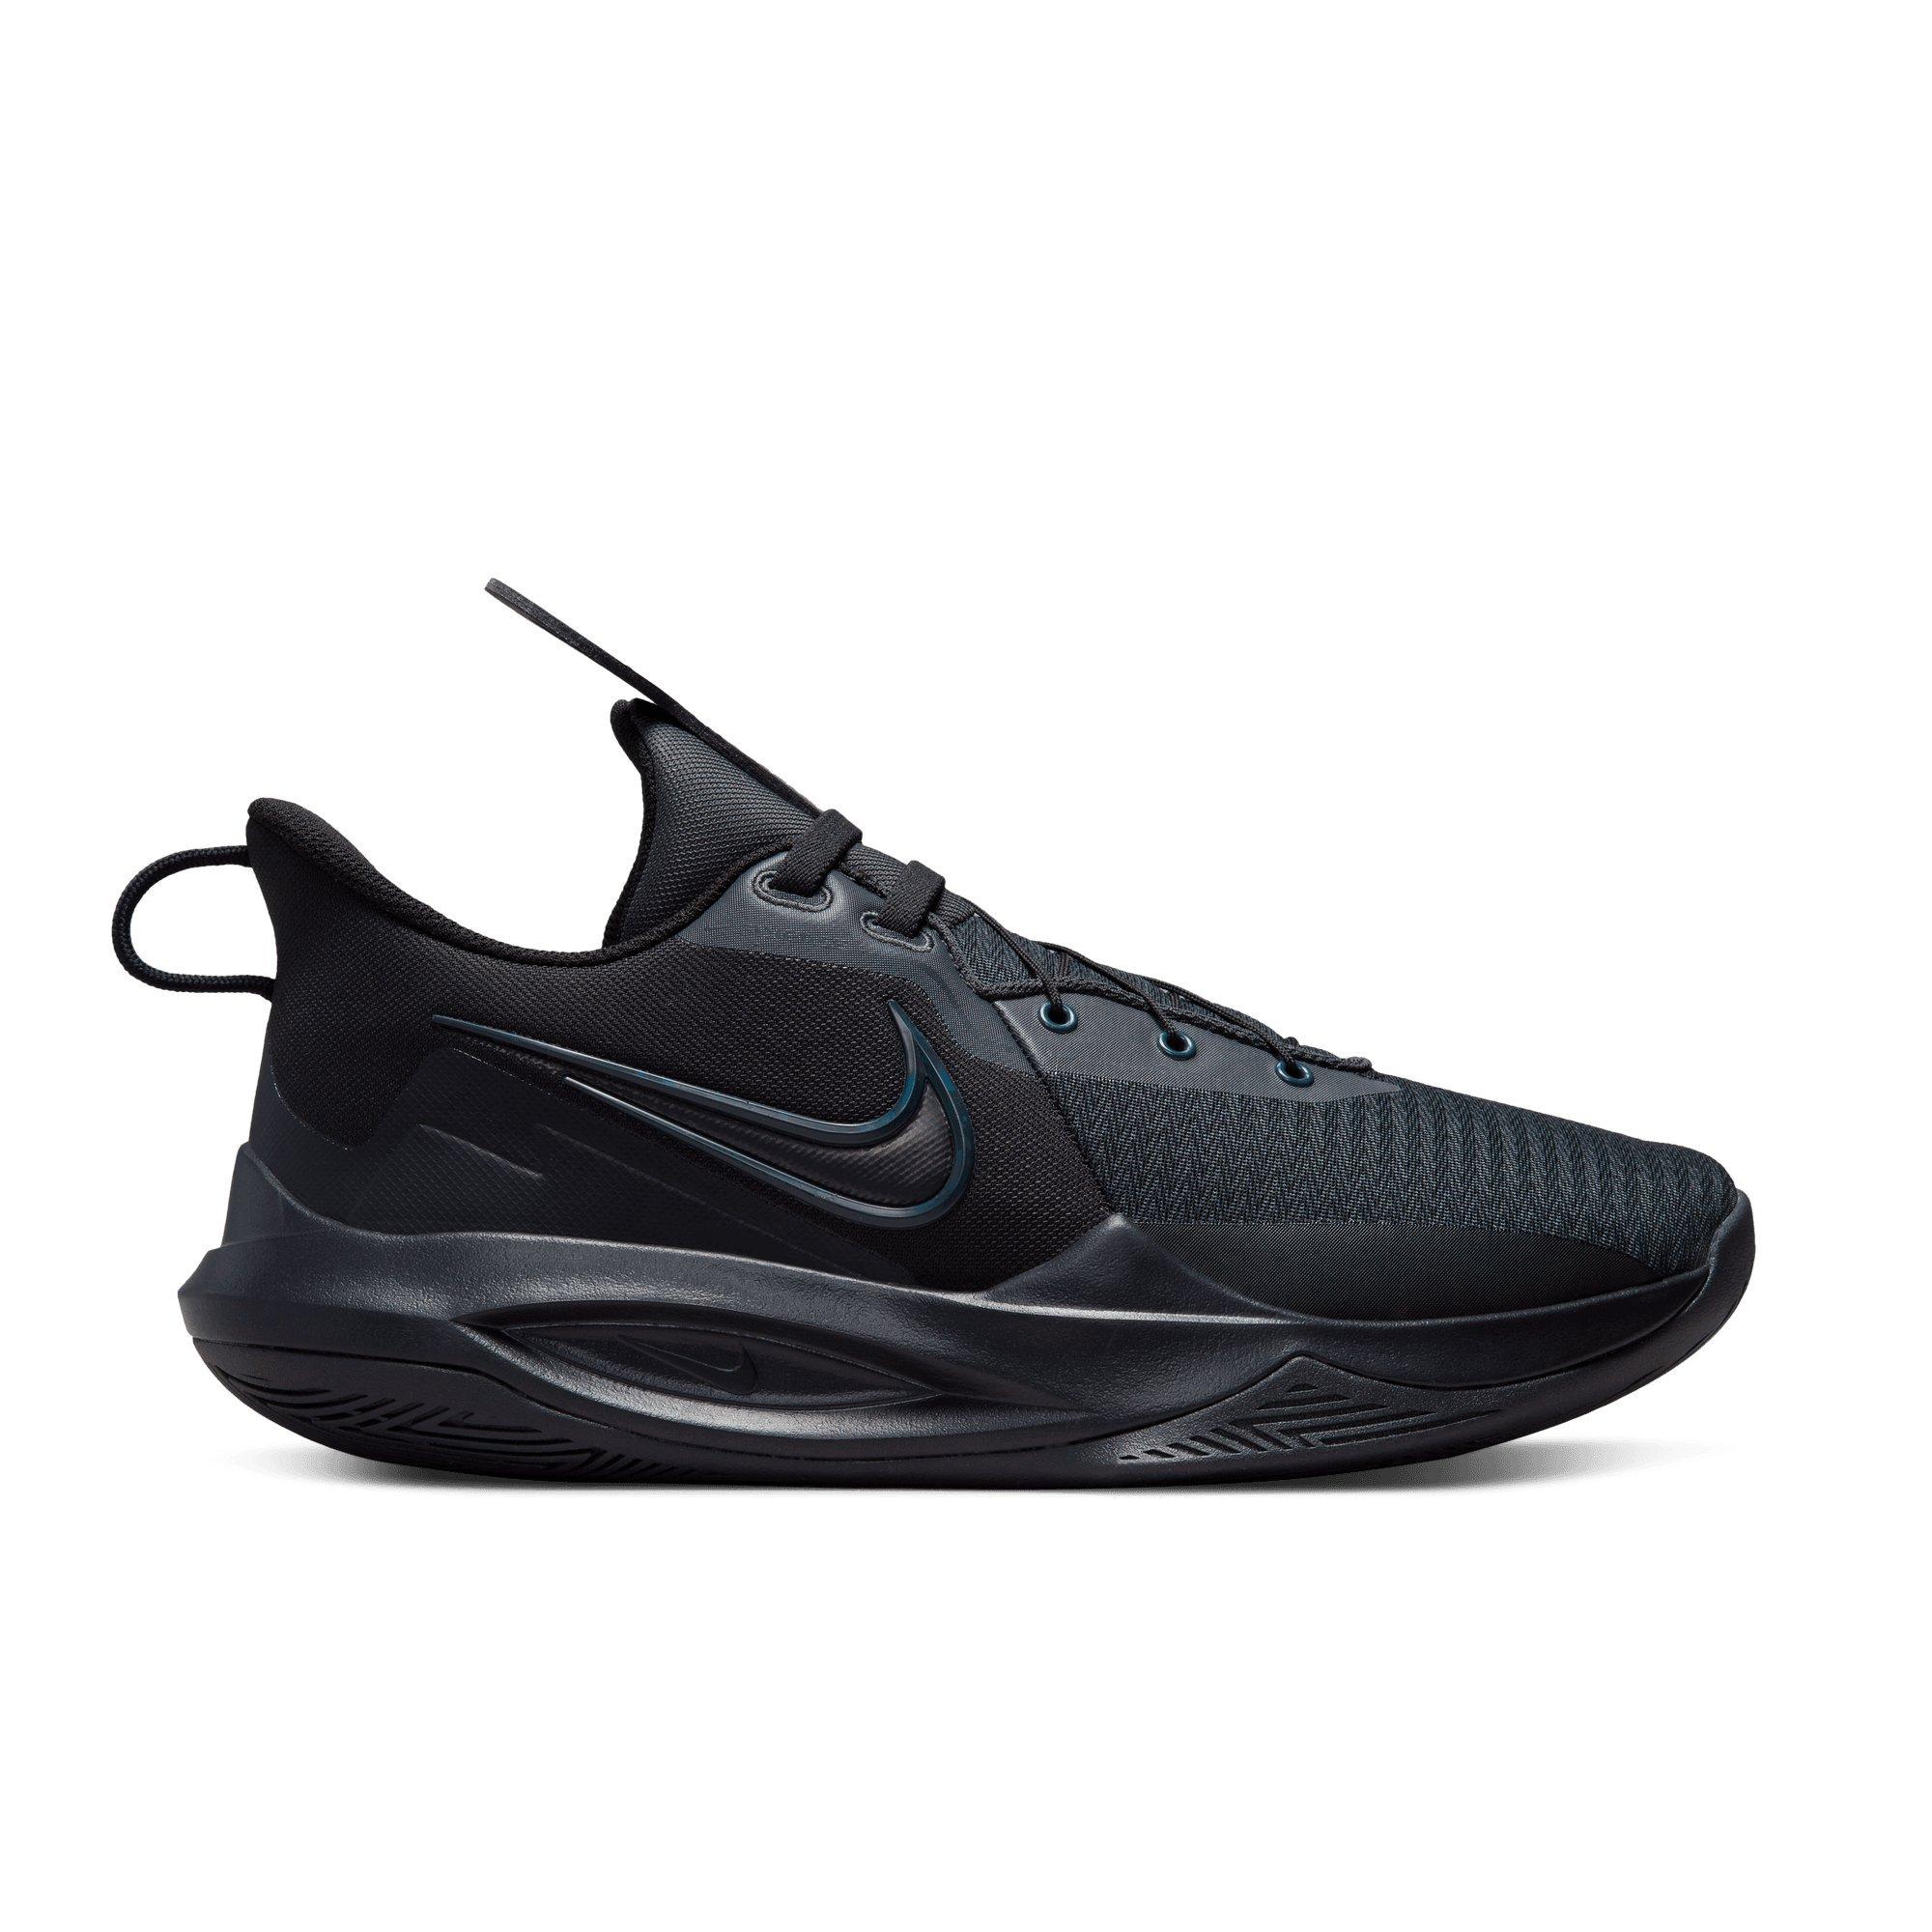 Pentagon K65 Black Basketball Referee Shoes US Mens Size 8,5 medium